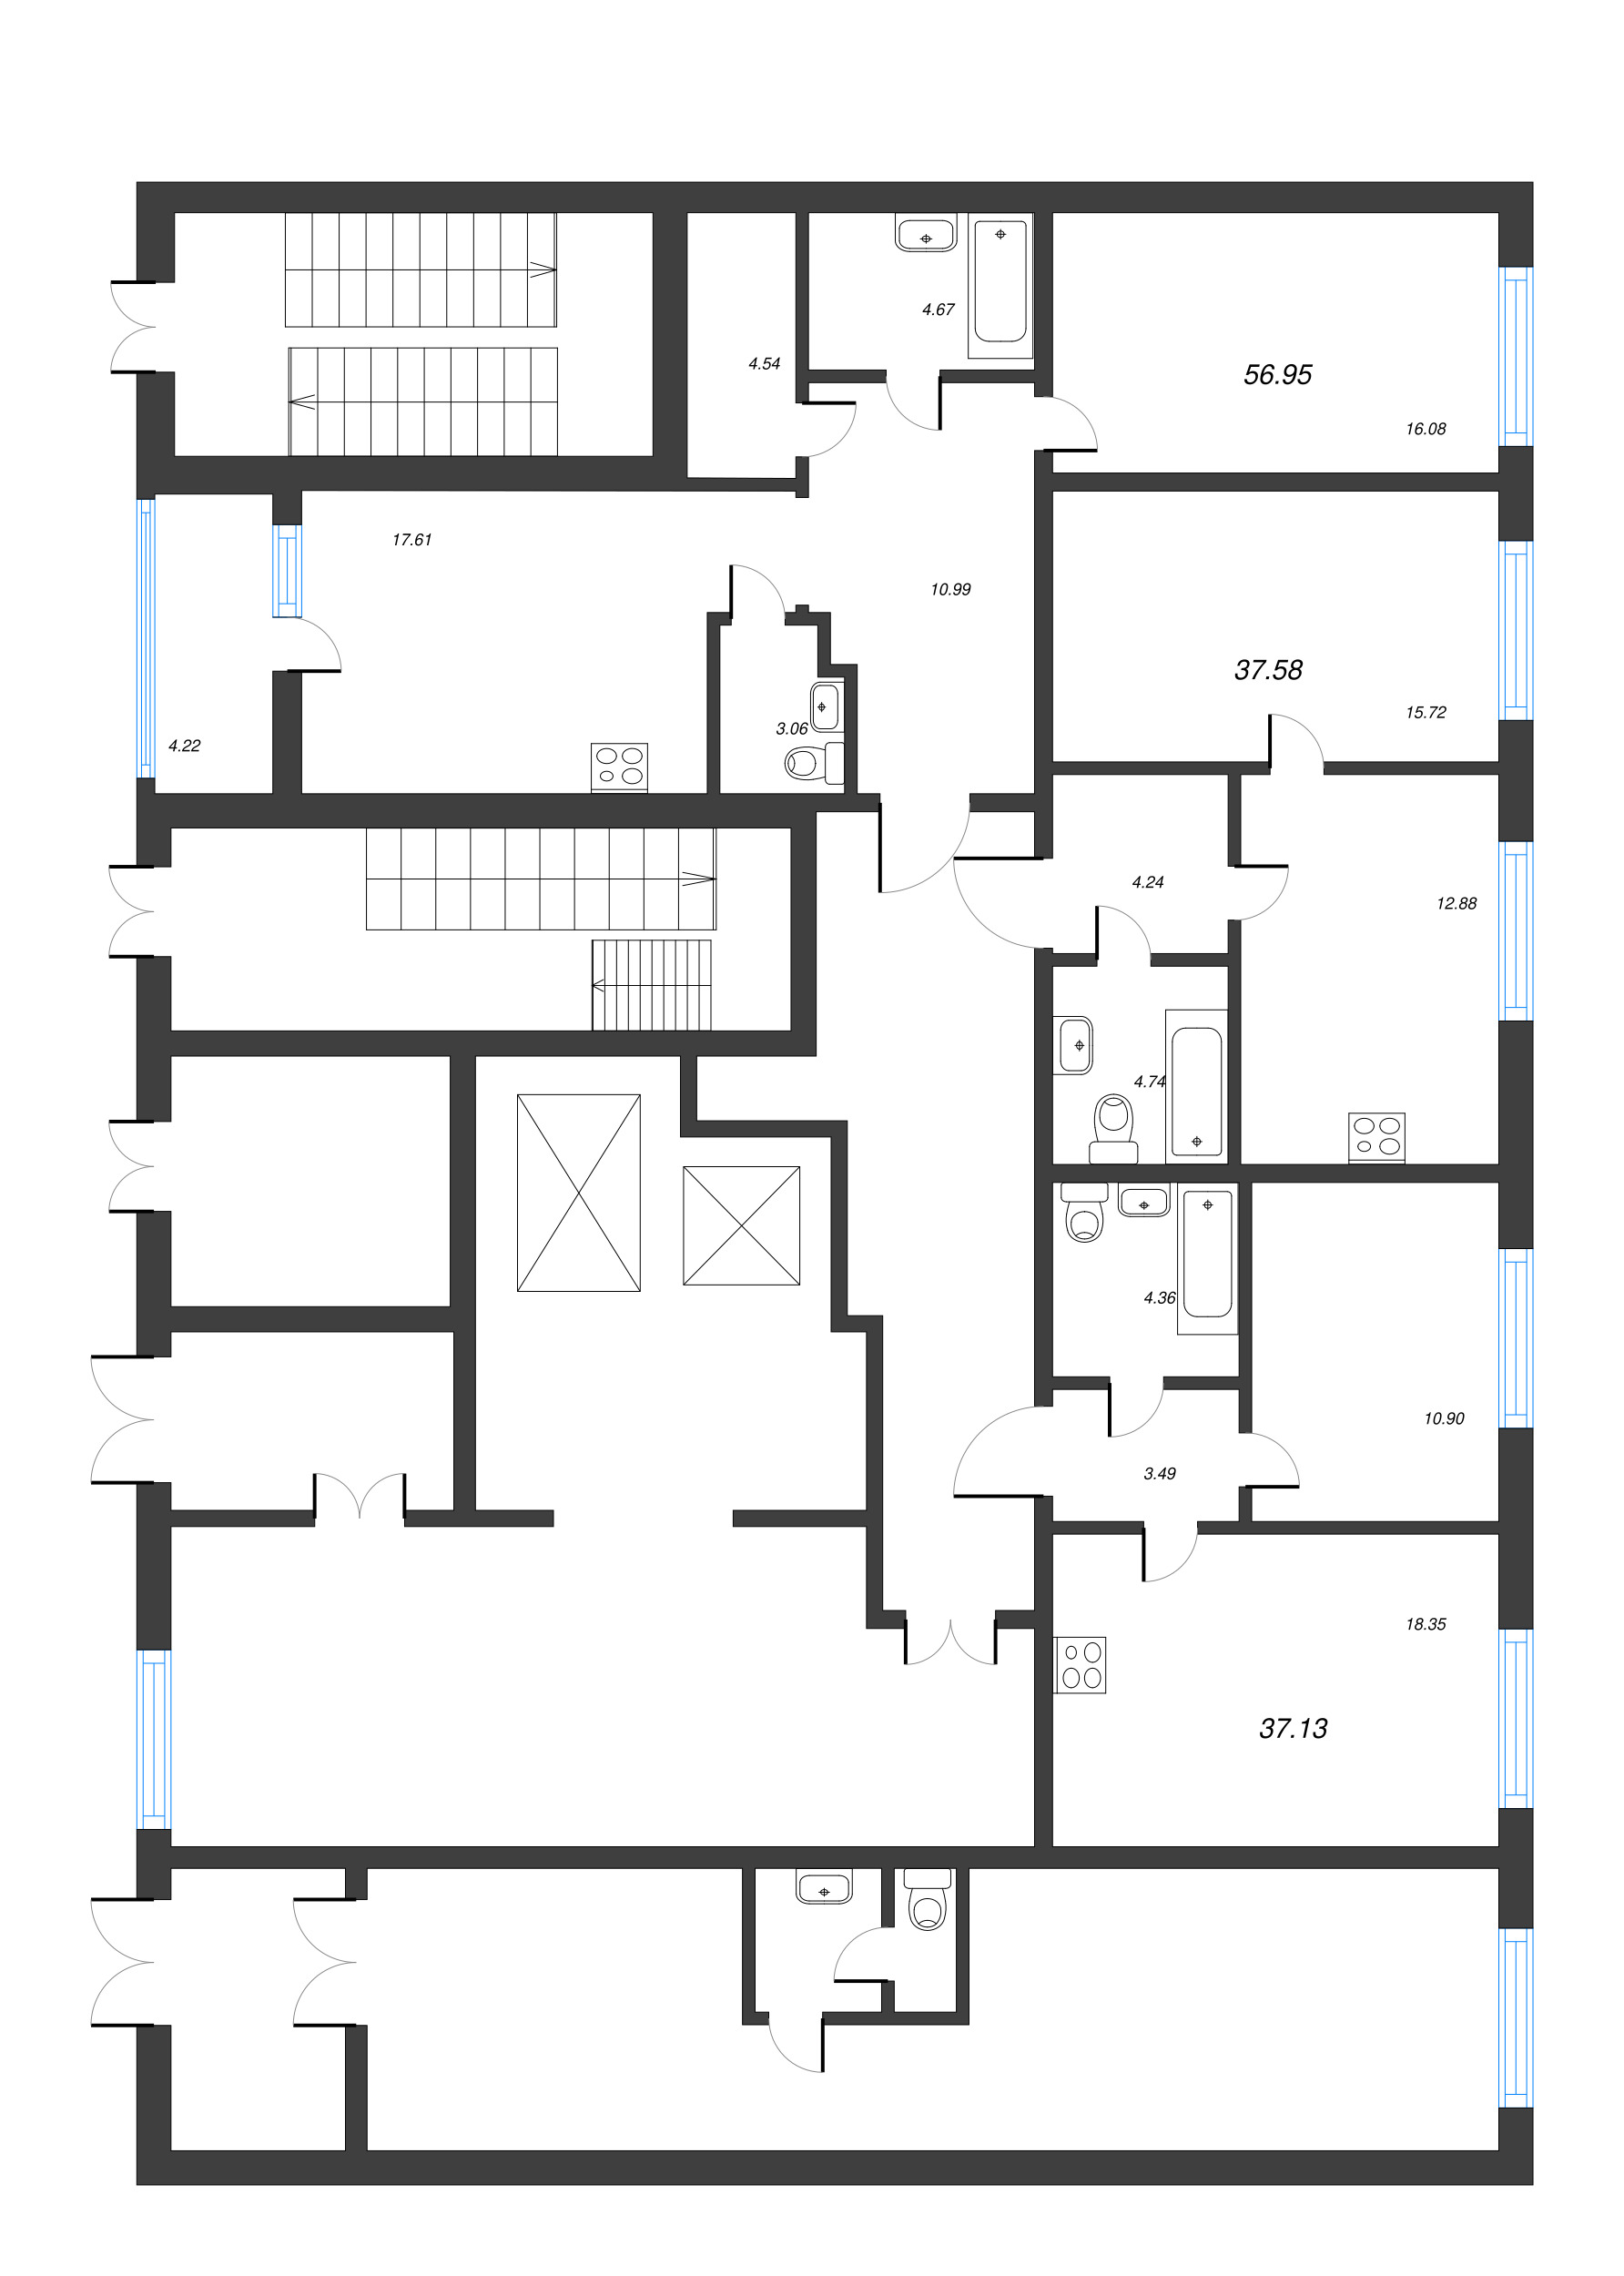 2-комнатная (Евро) квартира, 56.95 м² - планировка этажа